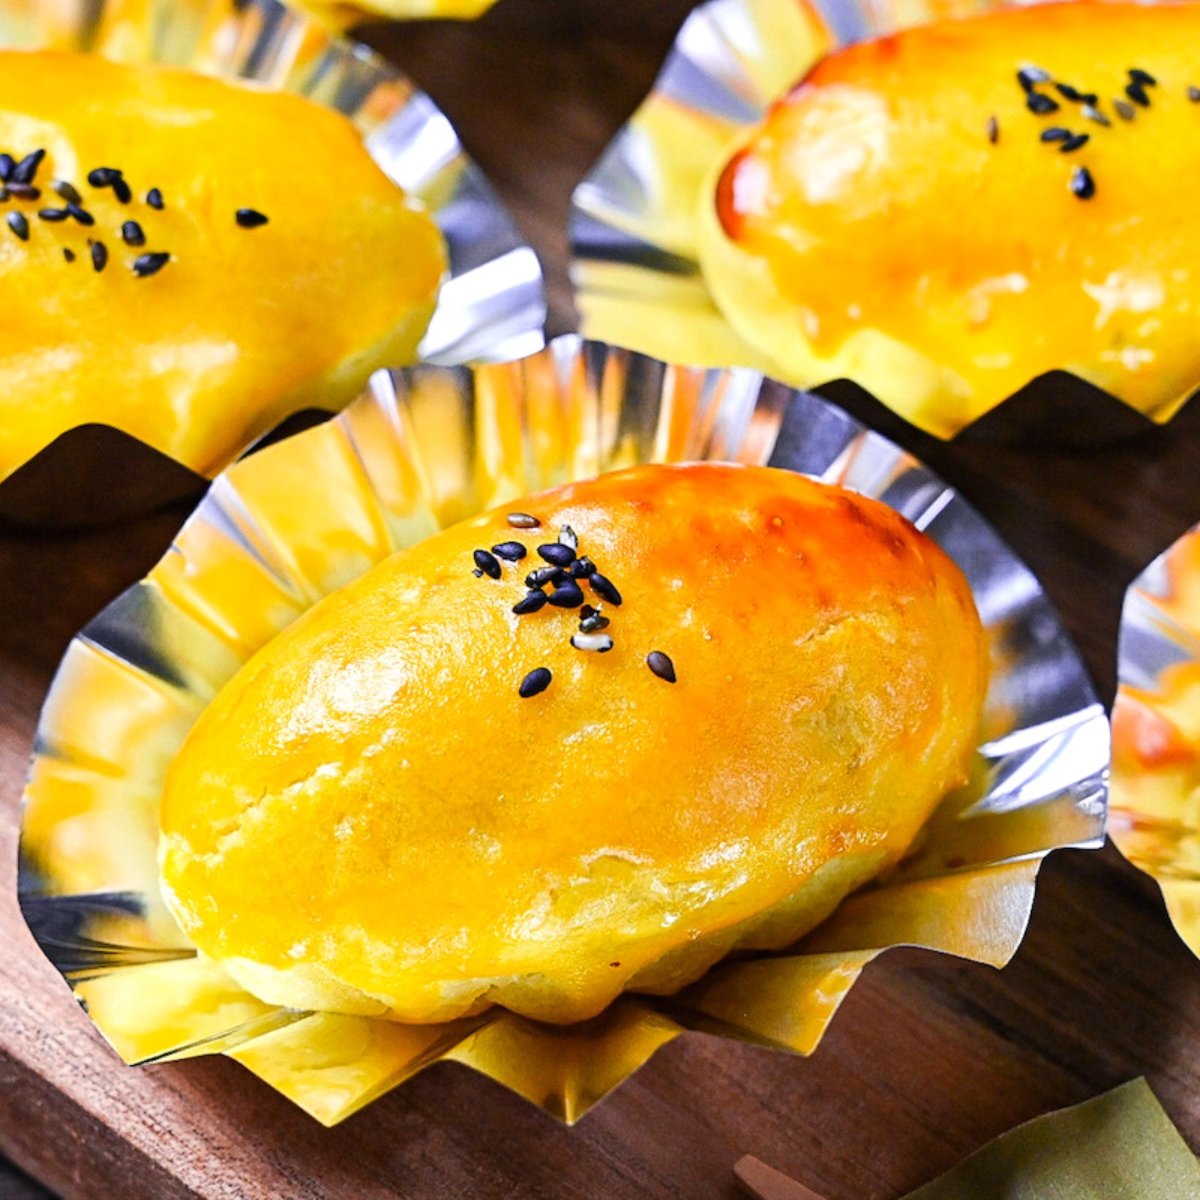 Japanese sweet potato dessert in foil cases sprinkled with black sesame seeds